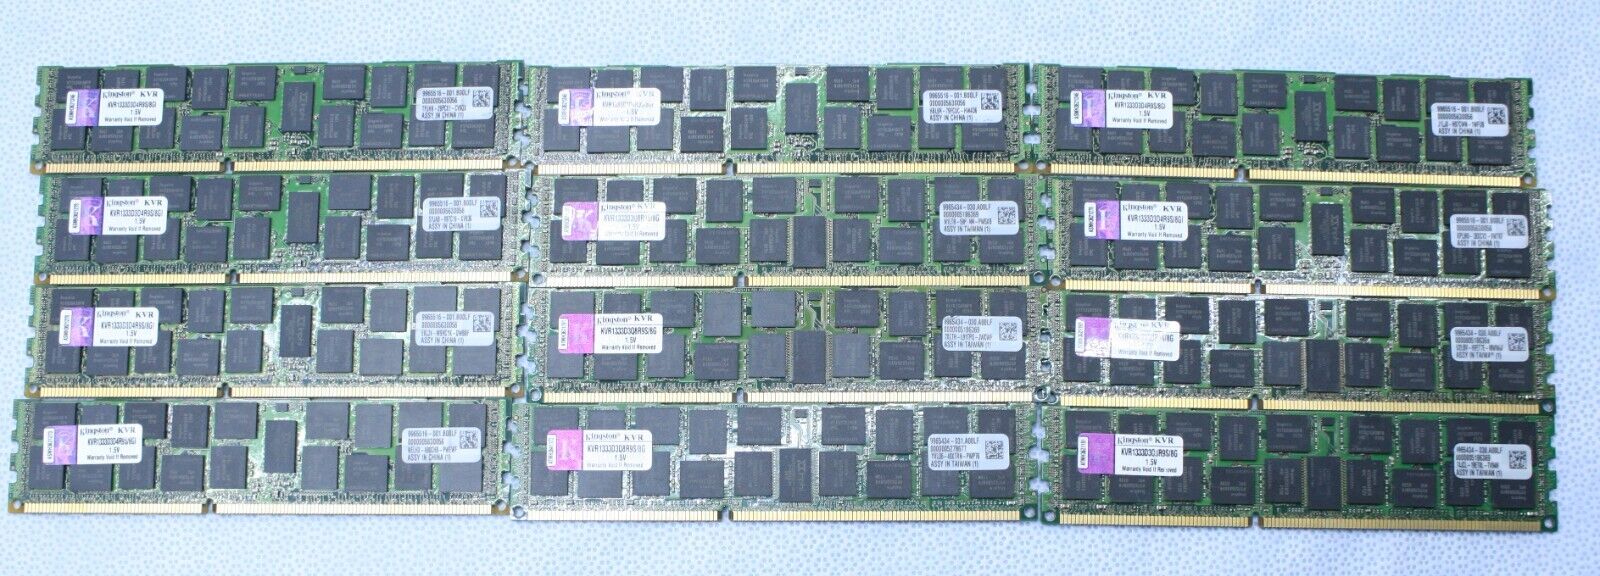 96GB (12x 8GB) 10600R RAM MEMORY UPGRADE KIT FOR HP Z800 WORKSTATION       T7-B2